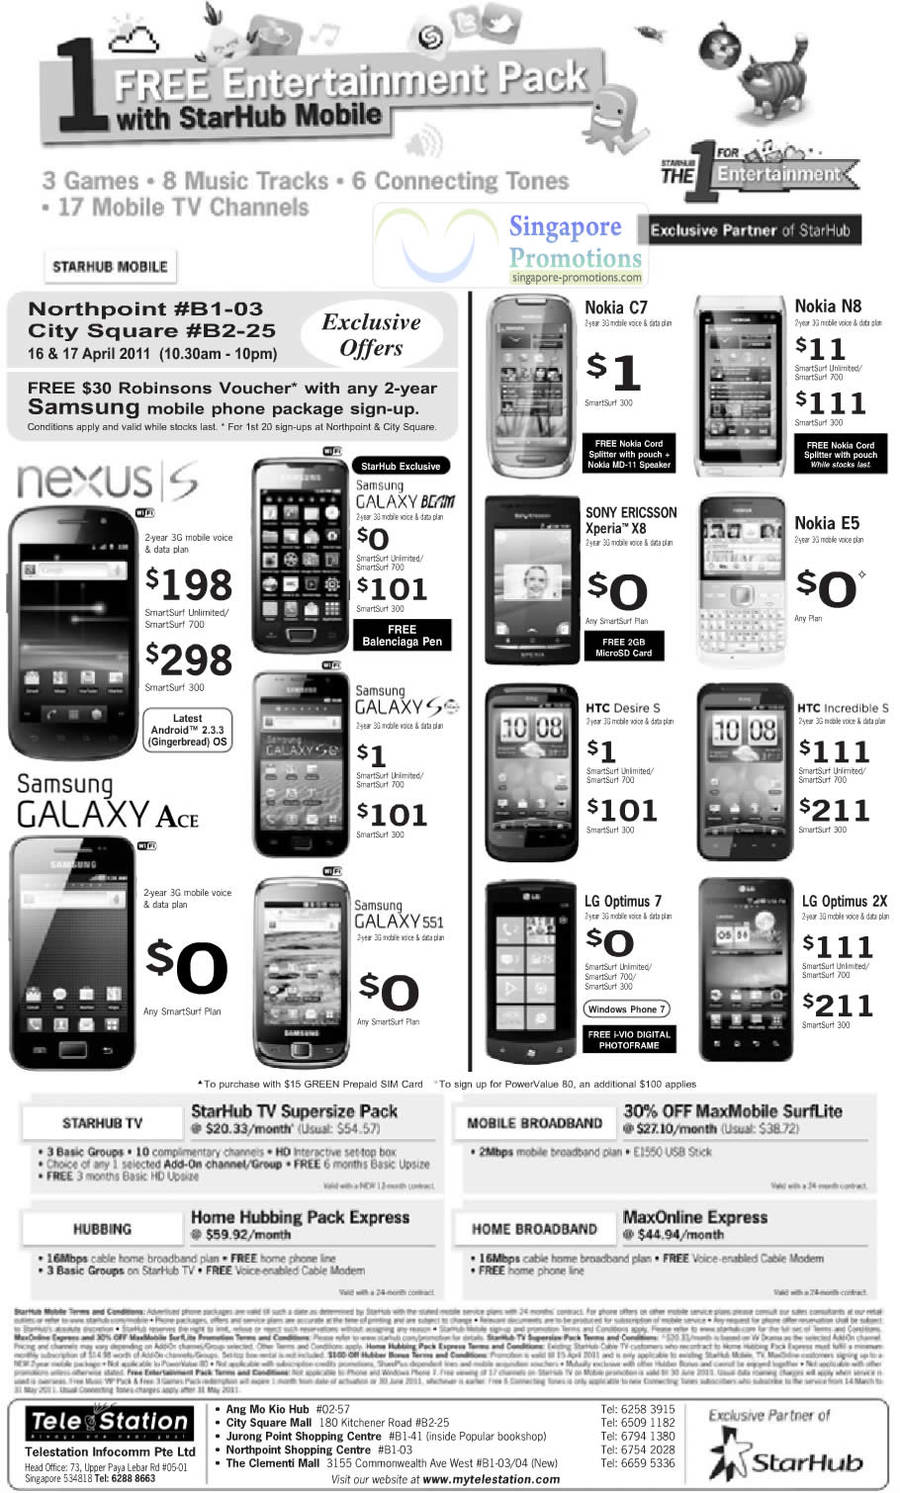 Nokia C7, N8, E5, Sony Ericsson Xperia X8, HTC Desire S, Incredible S, Nexus S, Galaxy Beam, Galaxy S, Galaxy Ace, Galaxy 551, LG Optimus 7, Optimus 2X